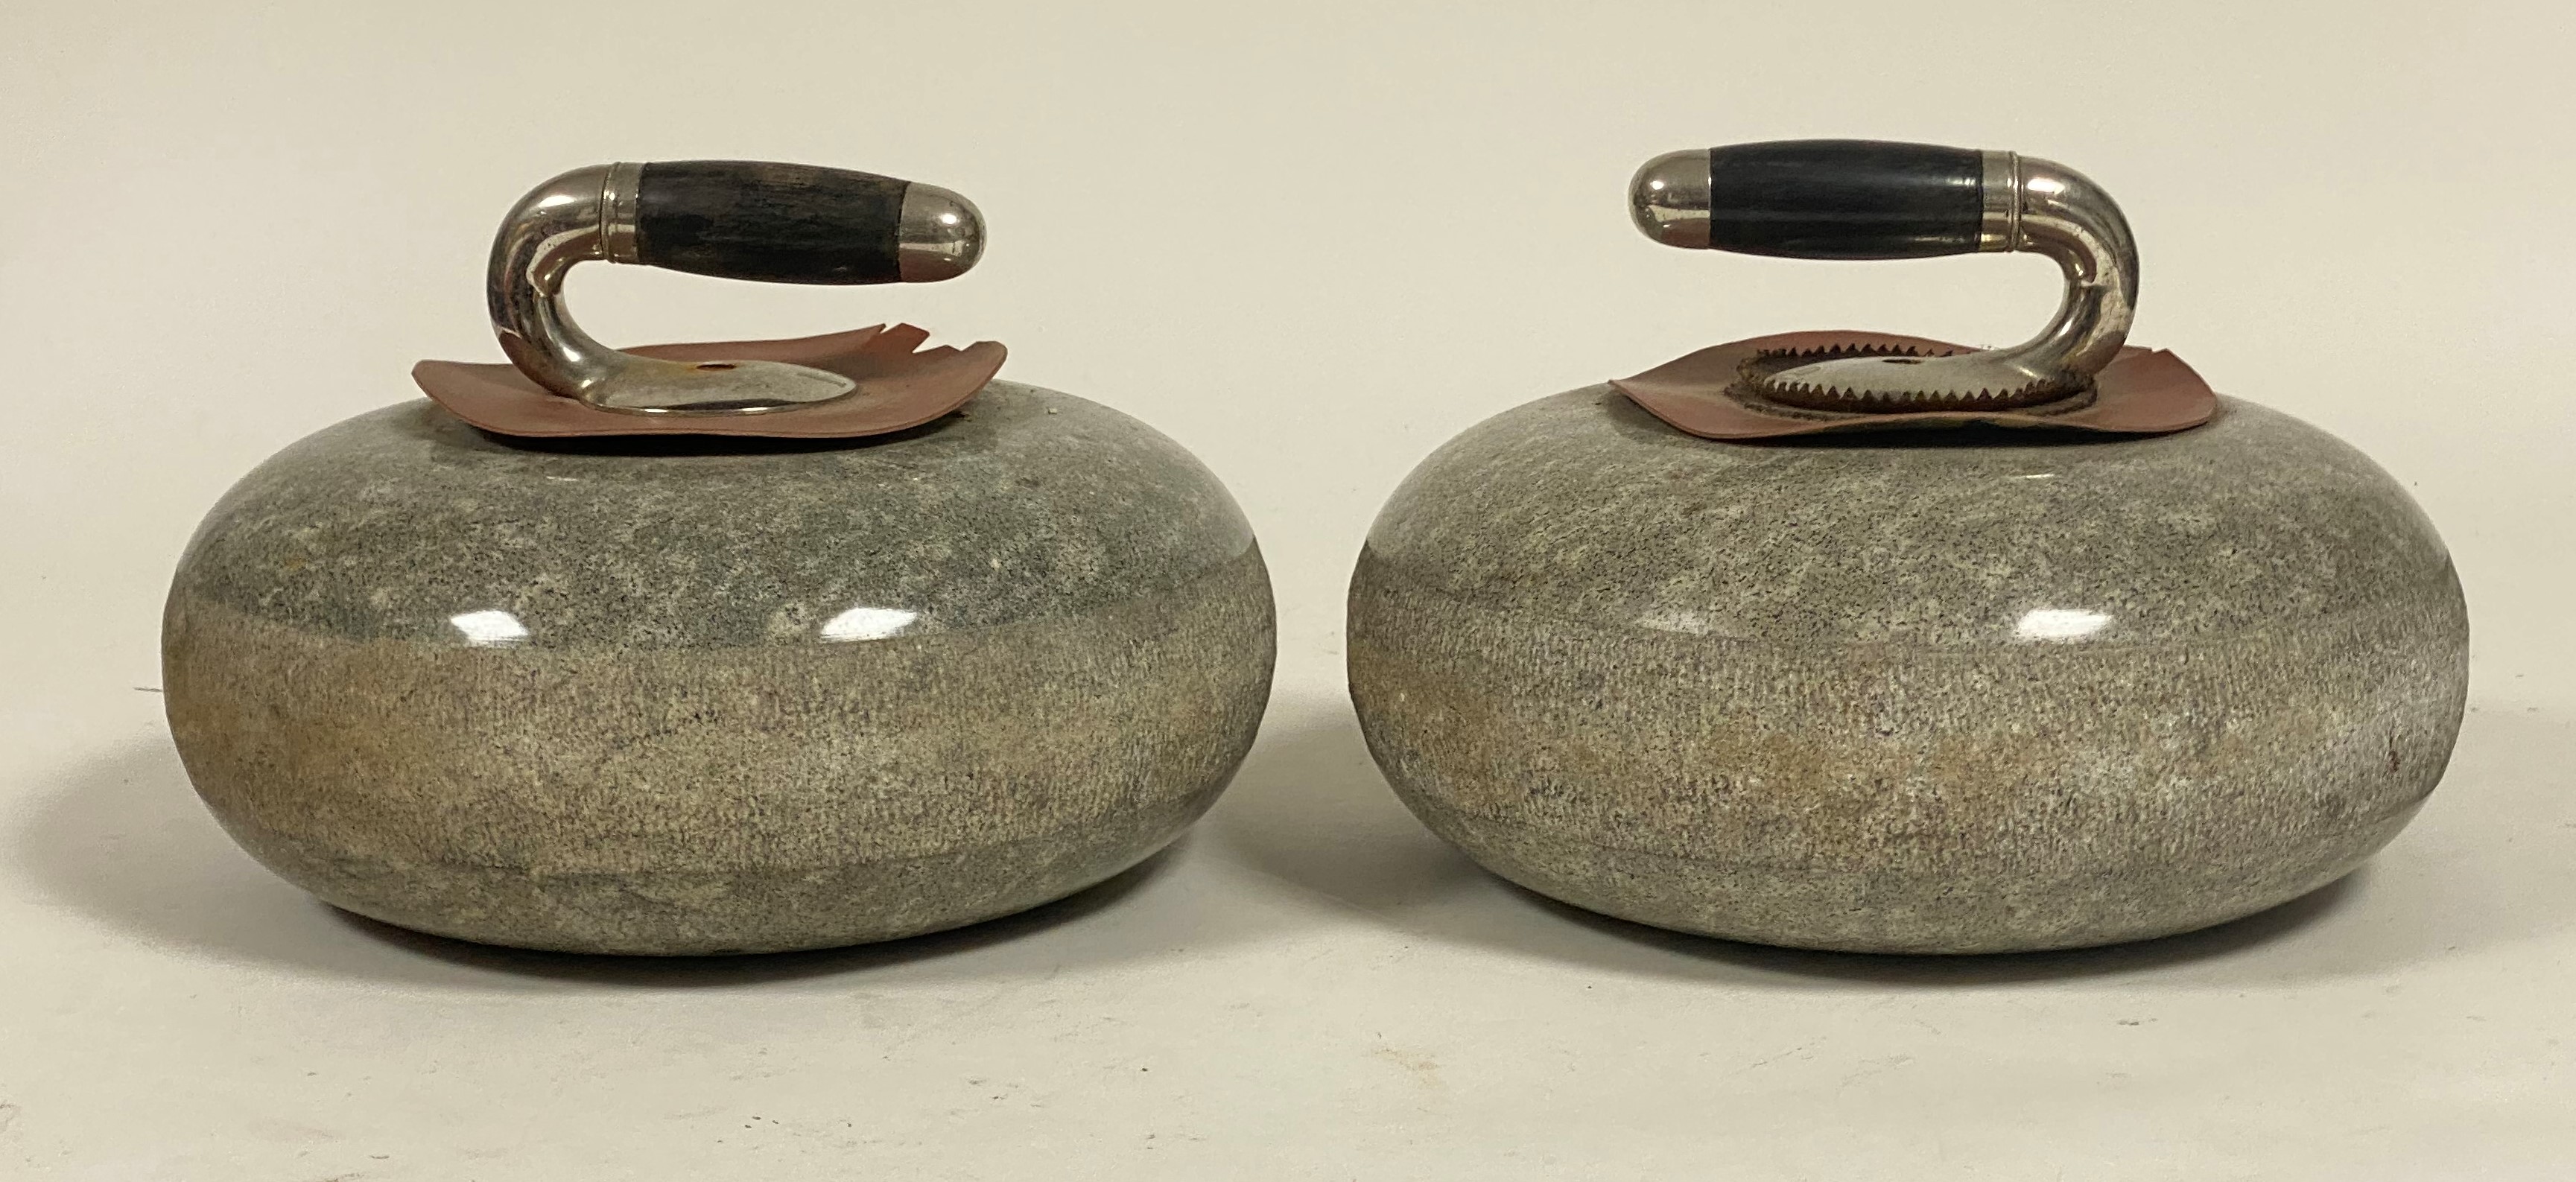 A pair of granite curling stones, with white metal collars and ebonised handles. Diameter c. 27cm